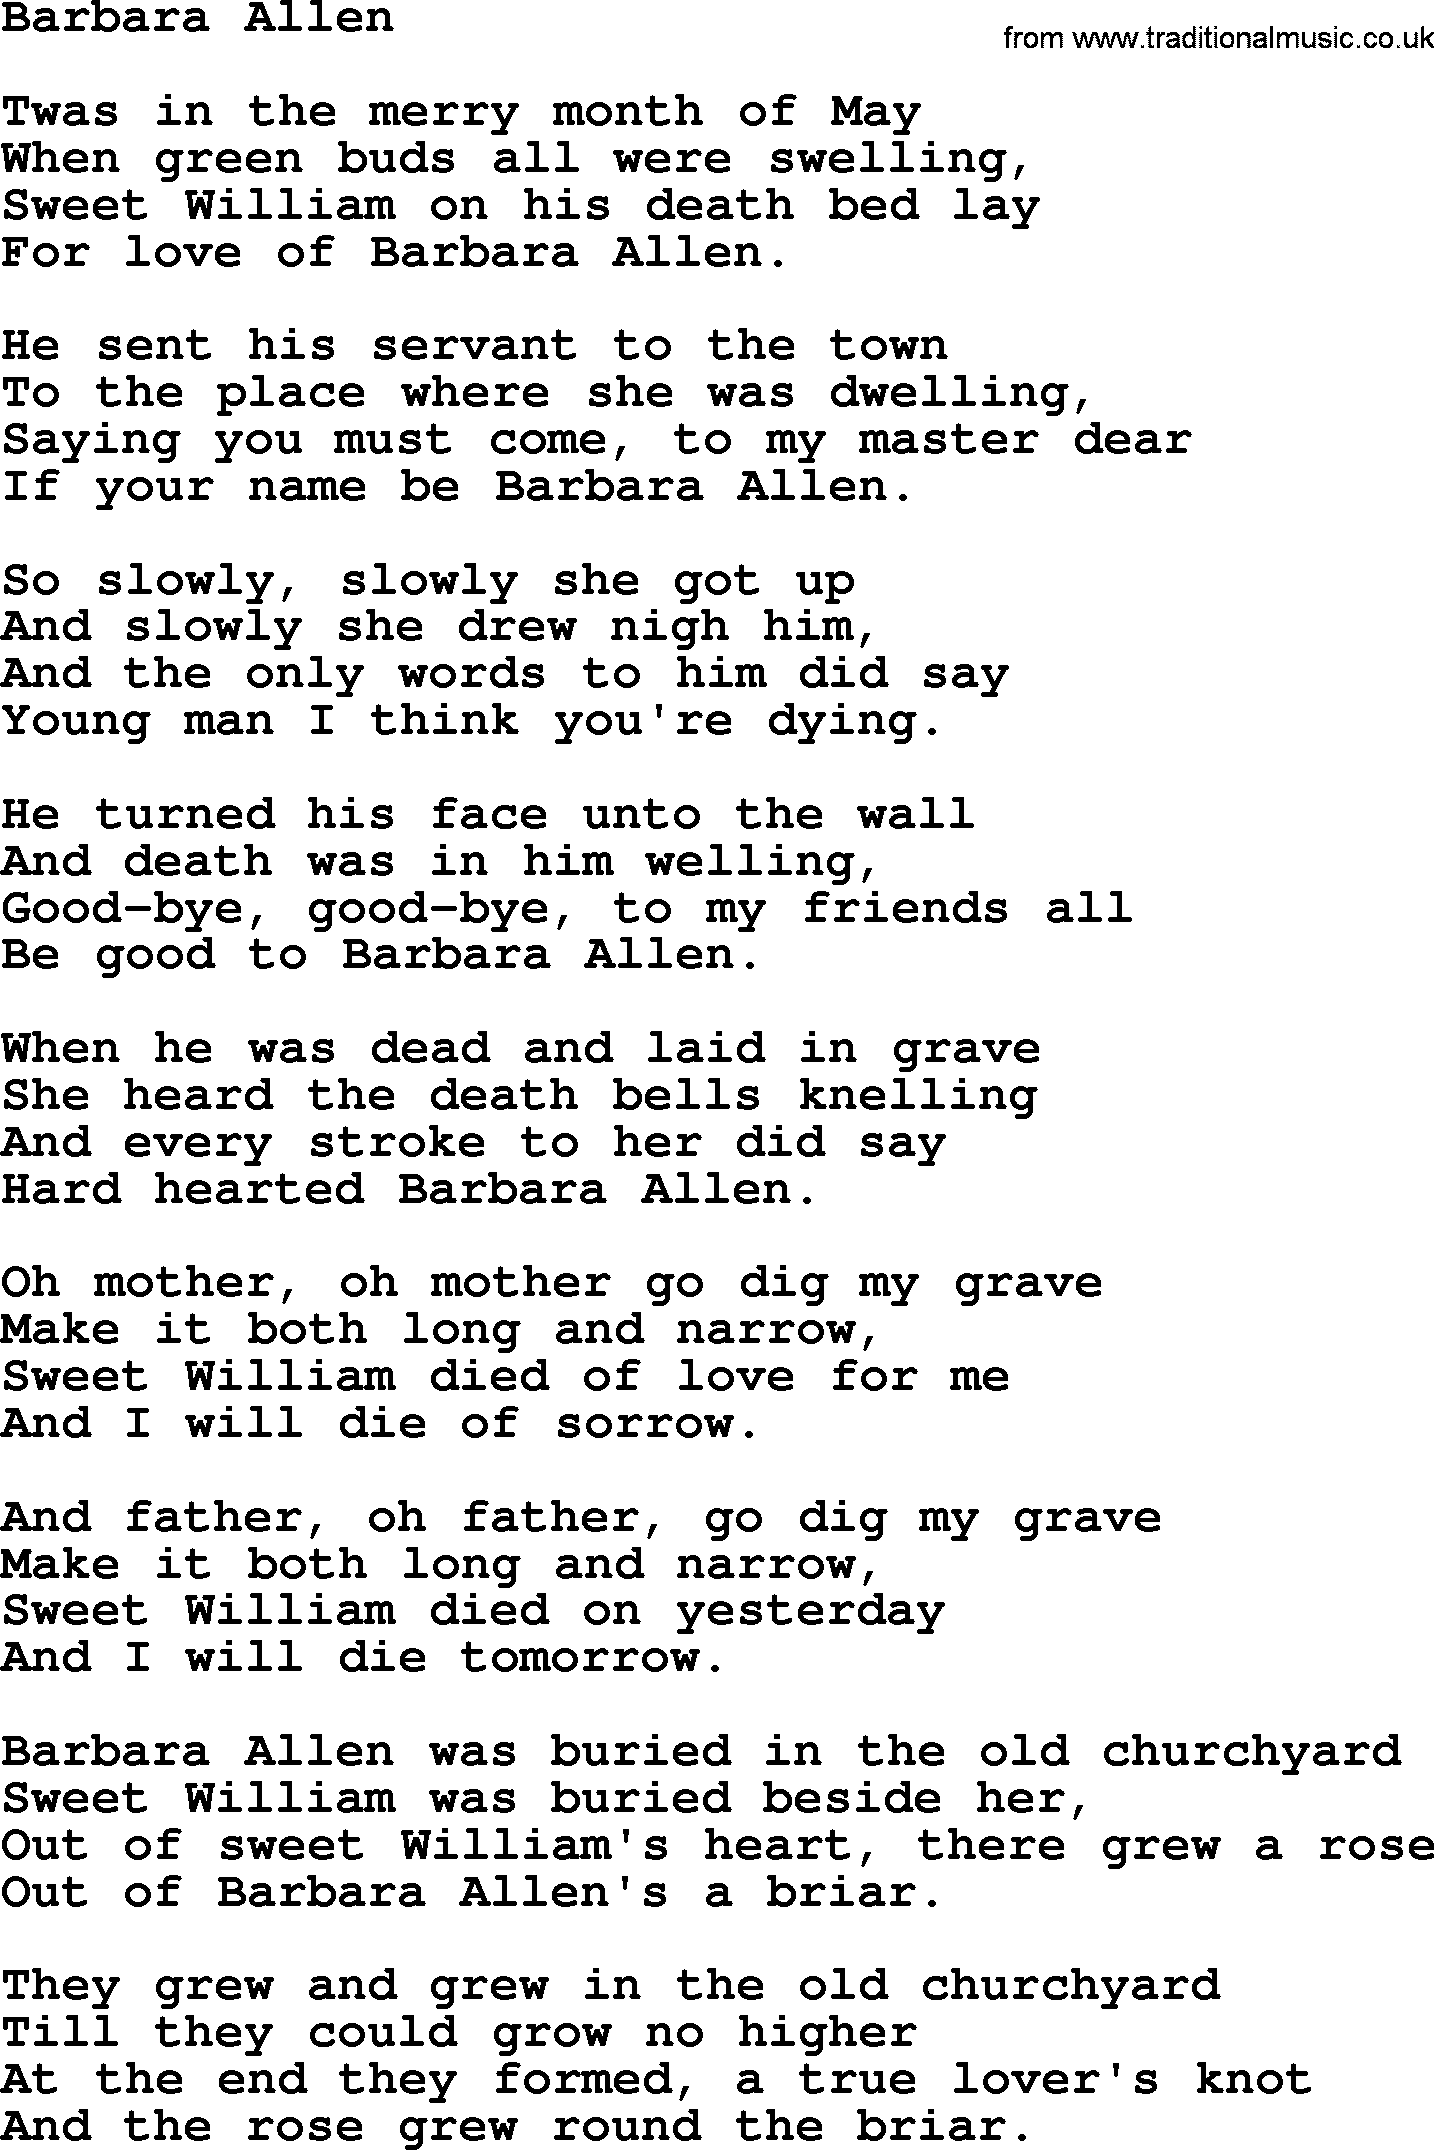 Joan Baez song Barbara Allen, lyrics